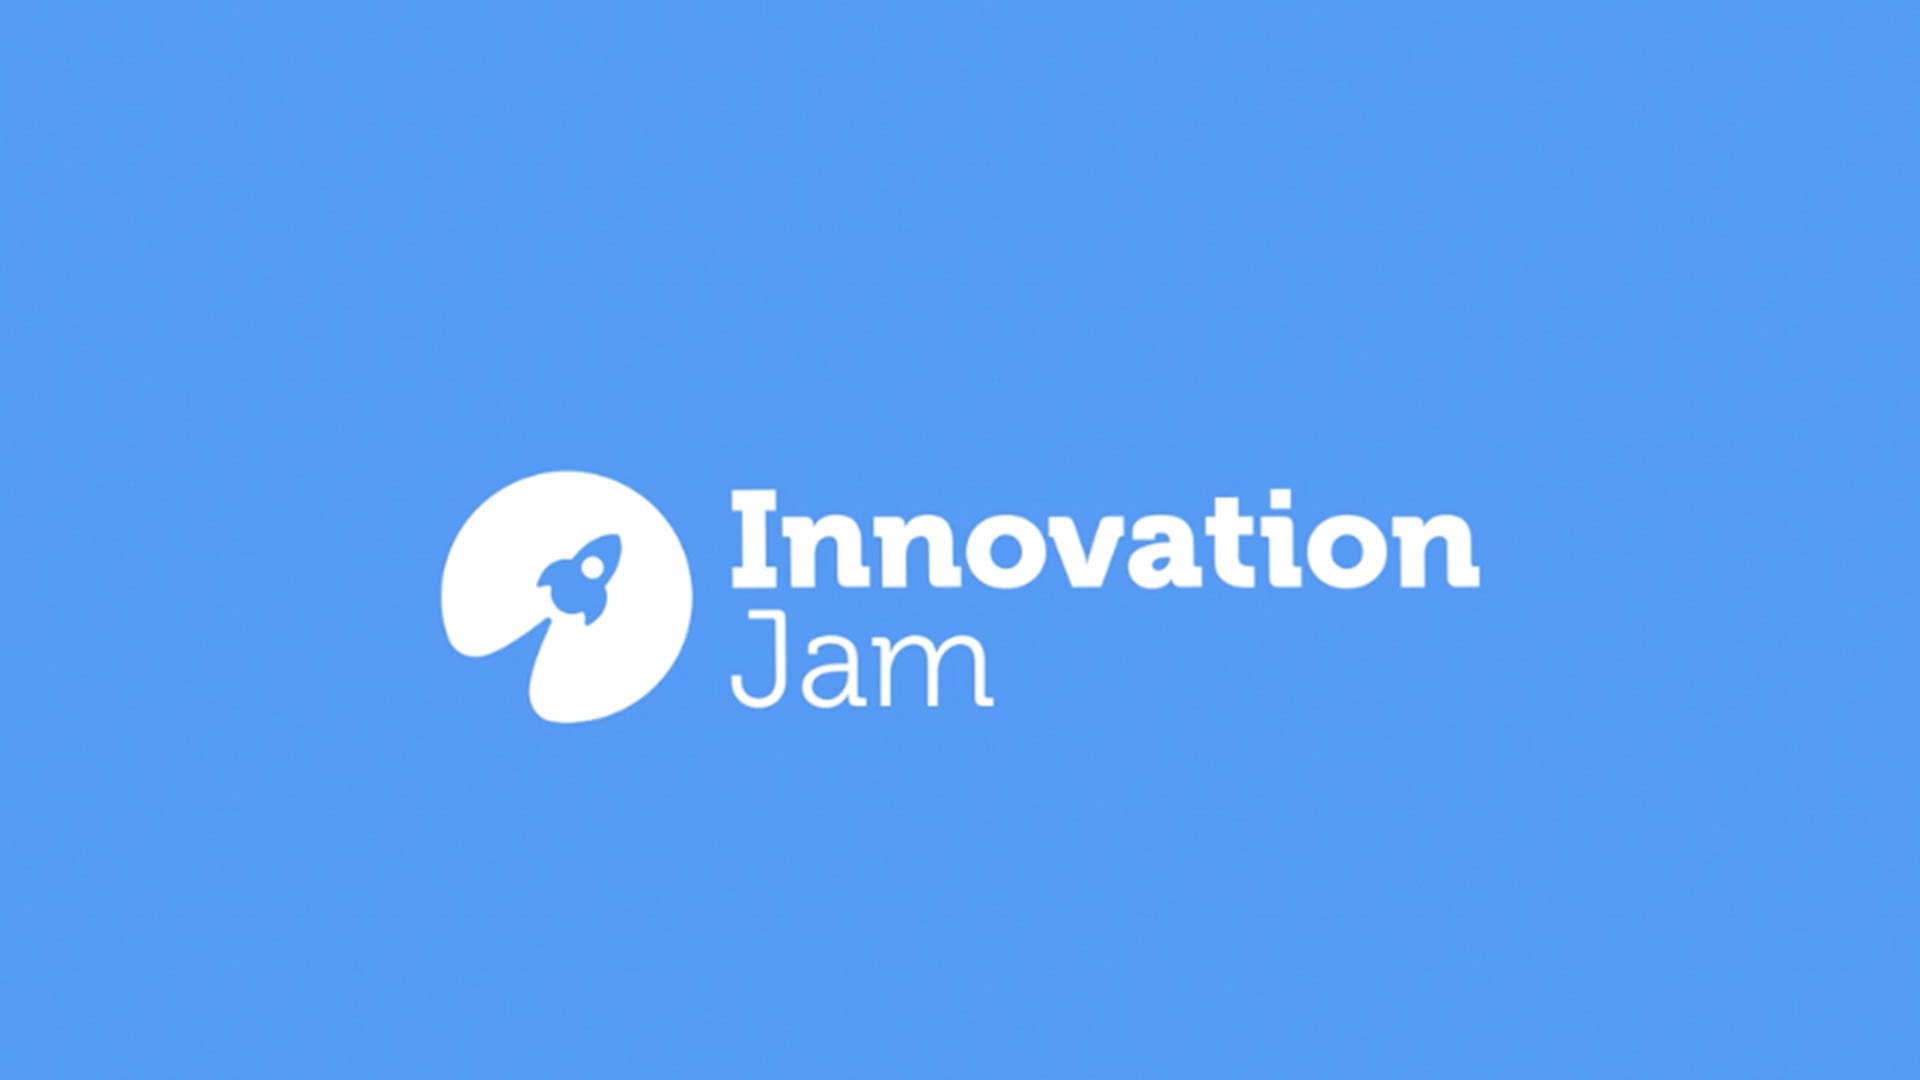 Innovation Jam logo of white text on blue background